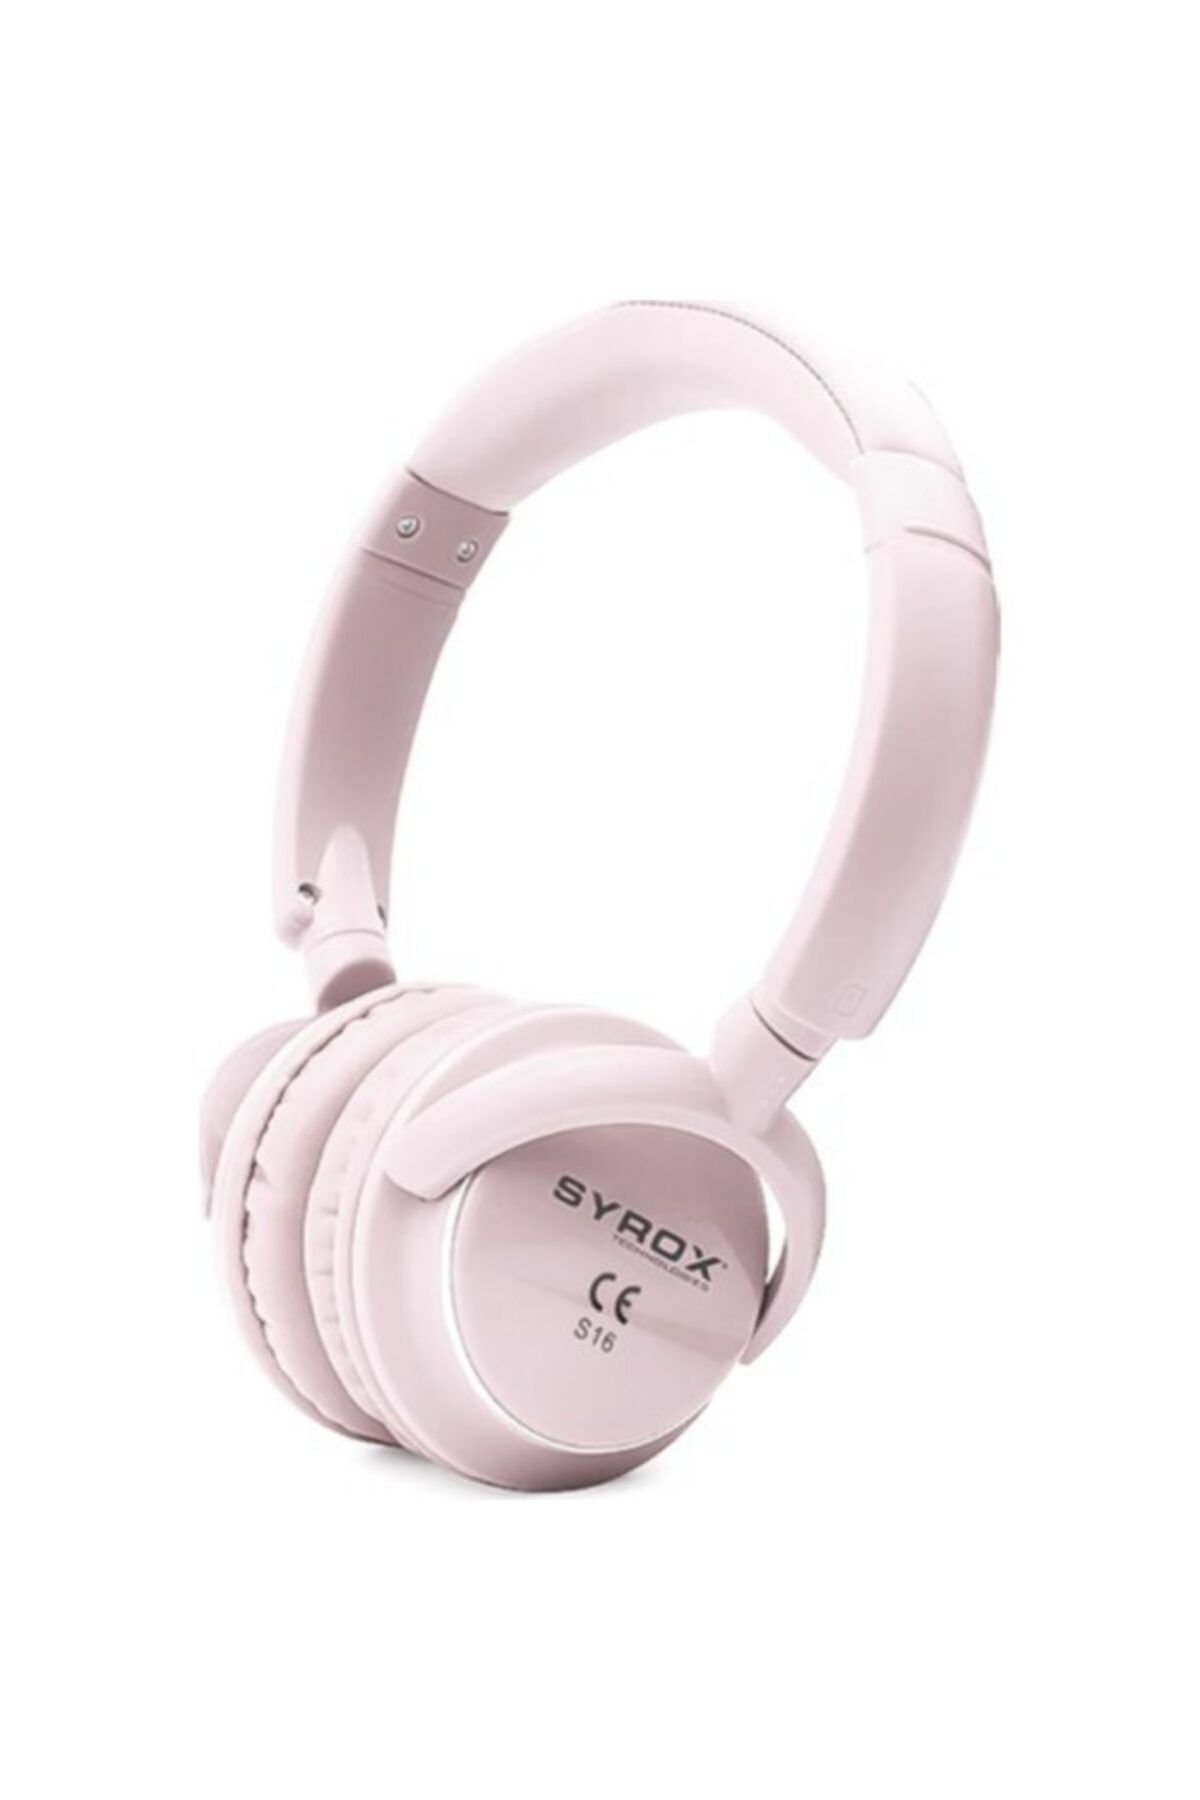 Syrox 16 Kablosuz Bluetoothlu Kulak Üstü Kulaklık-hafıza Kart Girişli Pmb -16